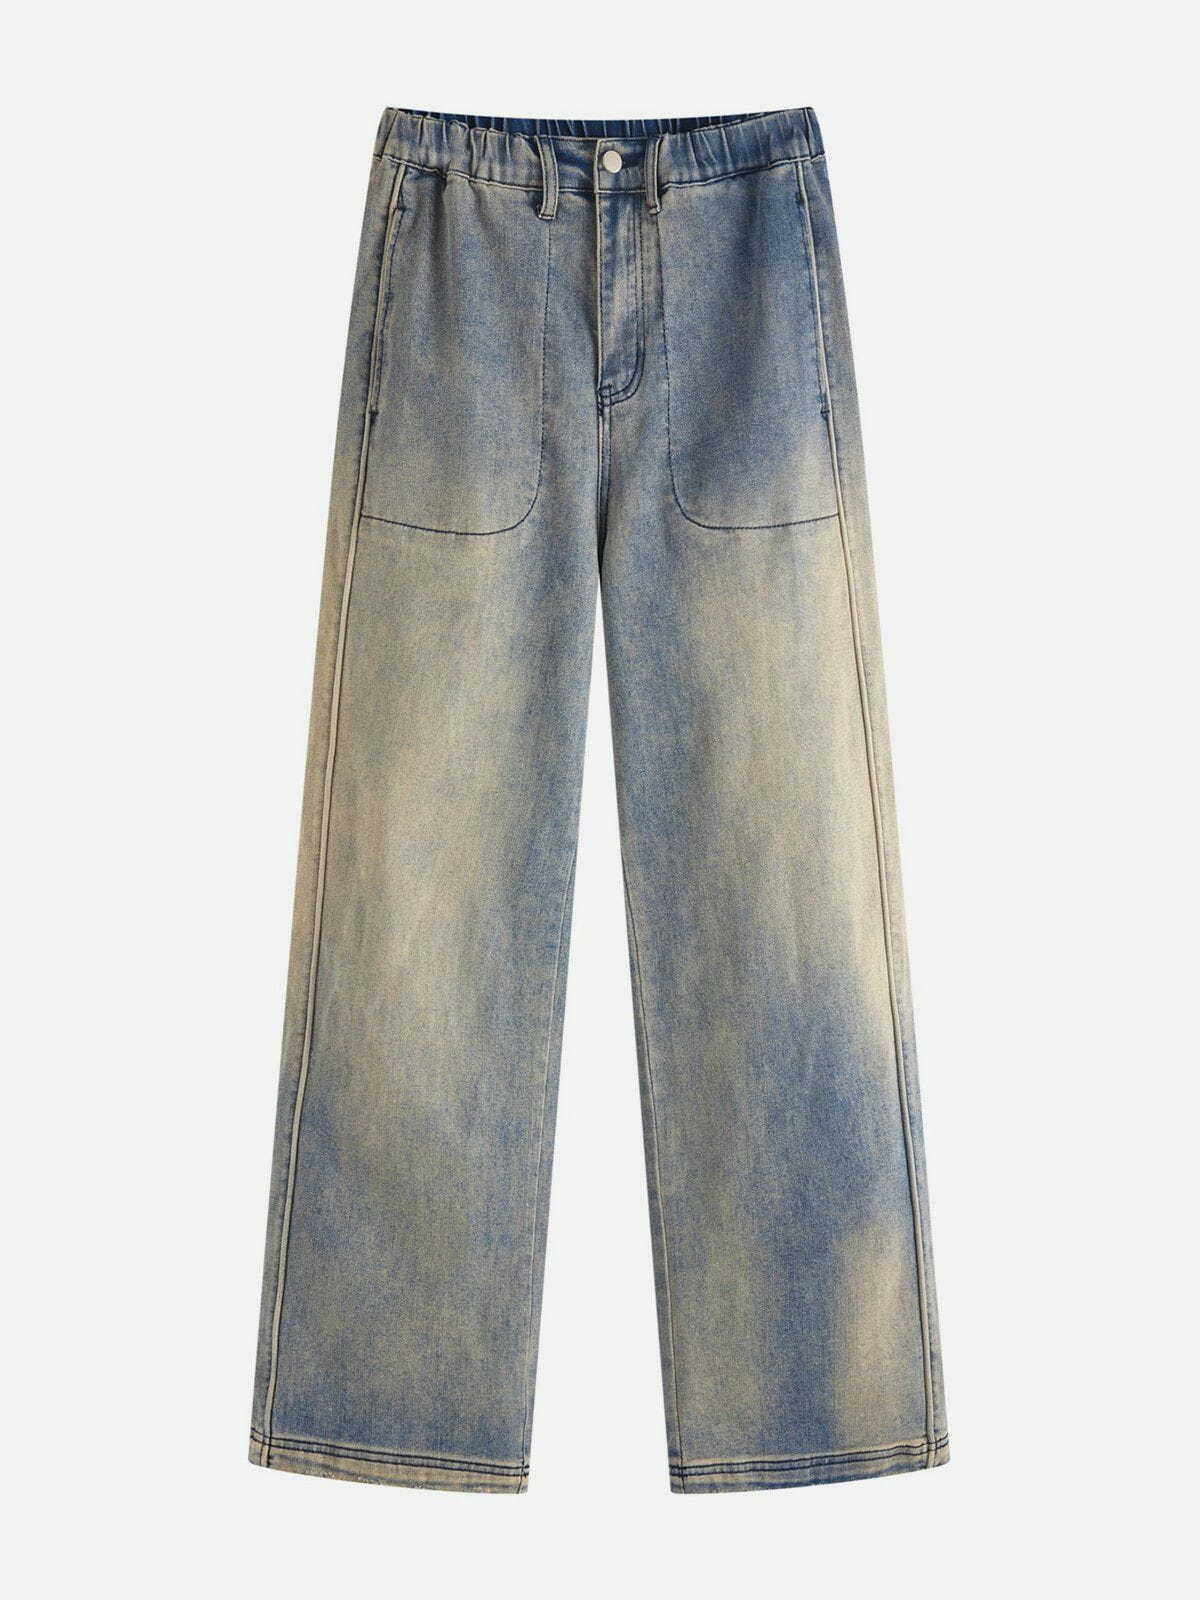 vibrant y2k aesthetic denim jeans 8409